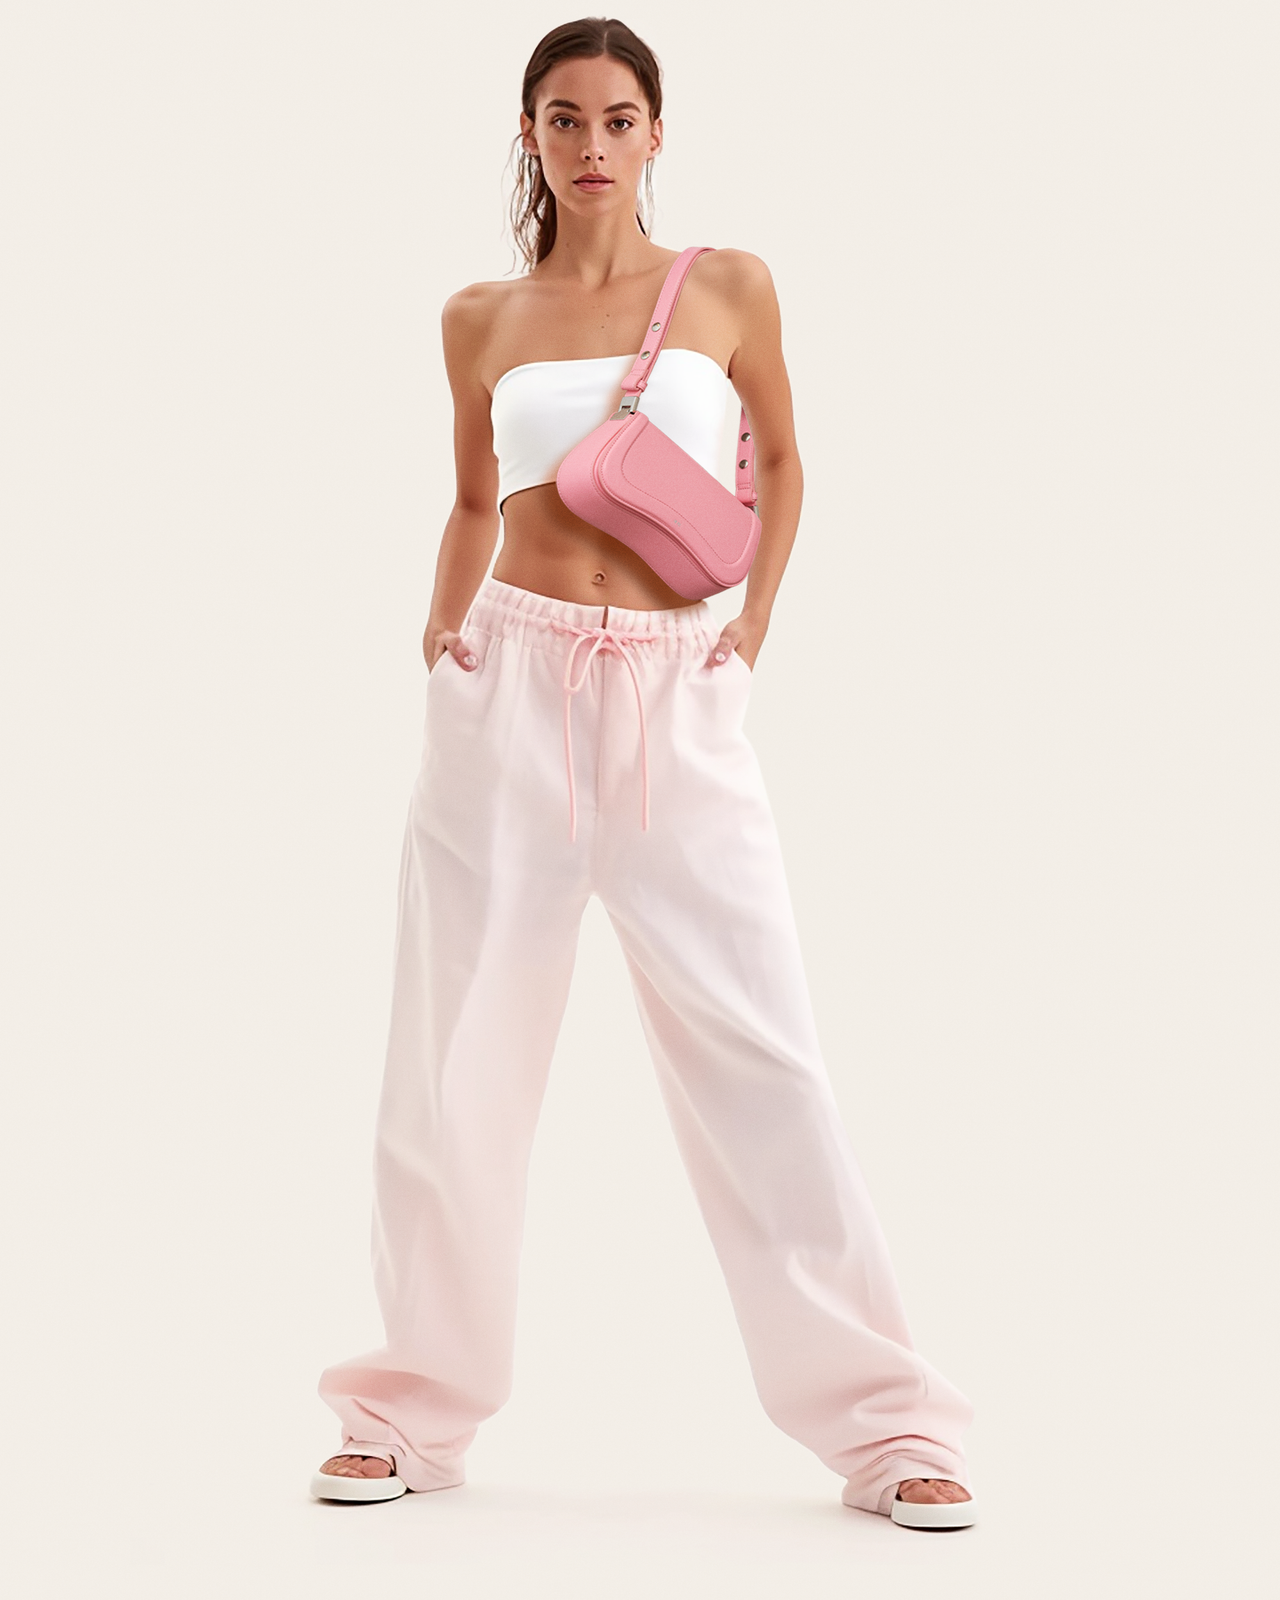 Becci Knitted Shoulder Bag - Pale Pink & Pink & Hot Pink - JW PEI